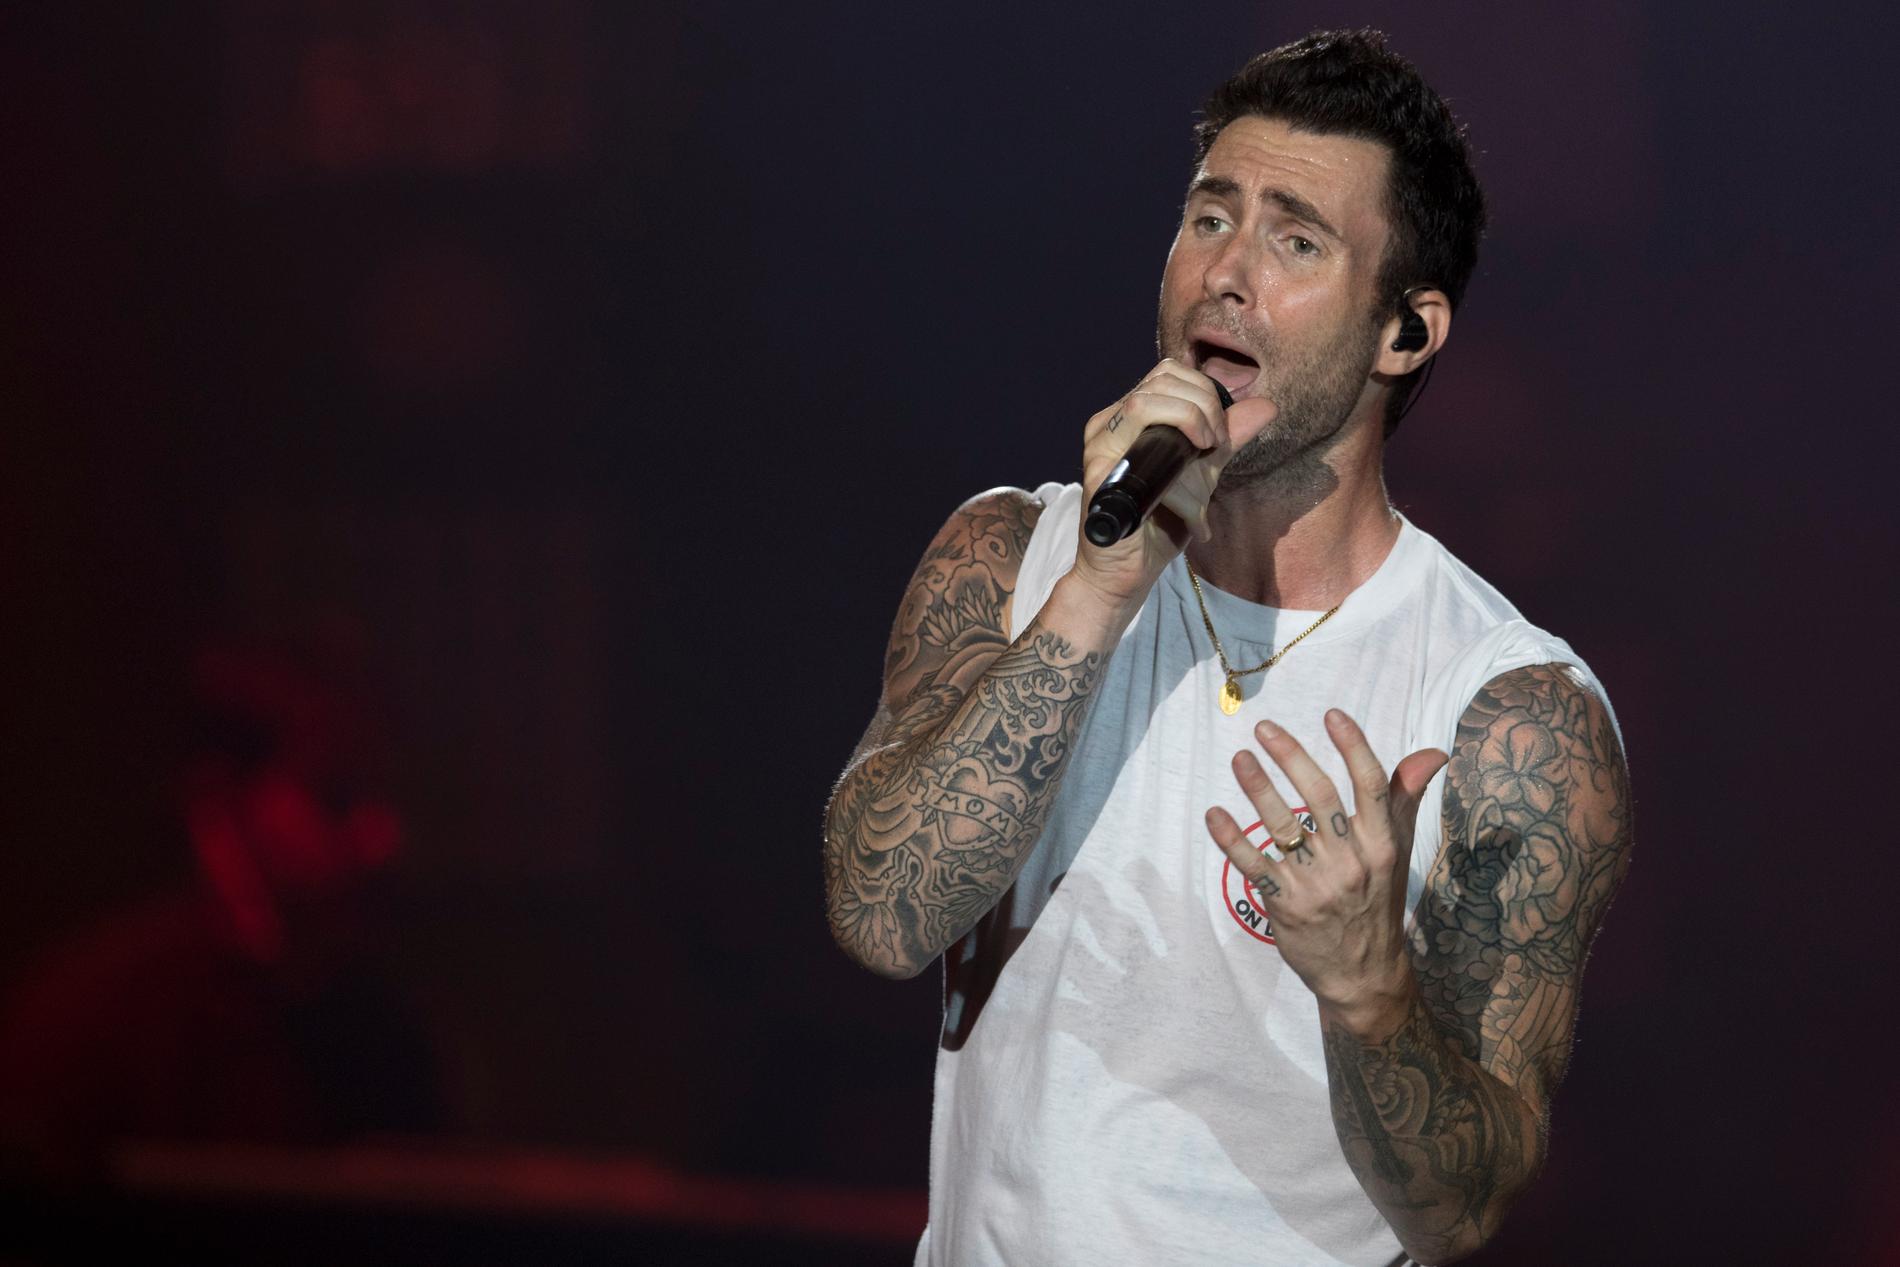 Adam Levine sjunger i Maroon 5. Bandet har nyligen haft en stor hit med låten "Girls like you". Arkivbild.